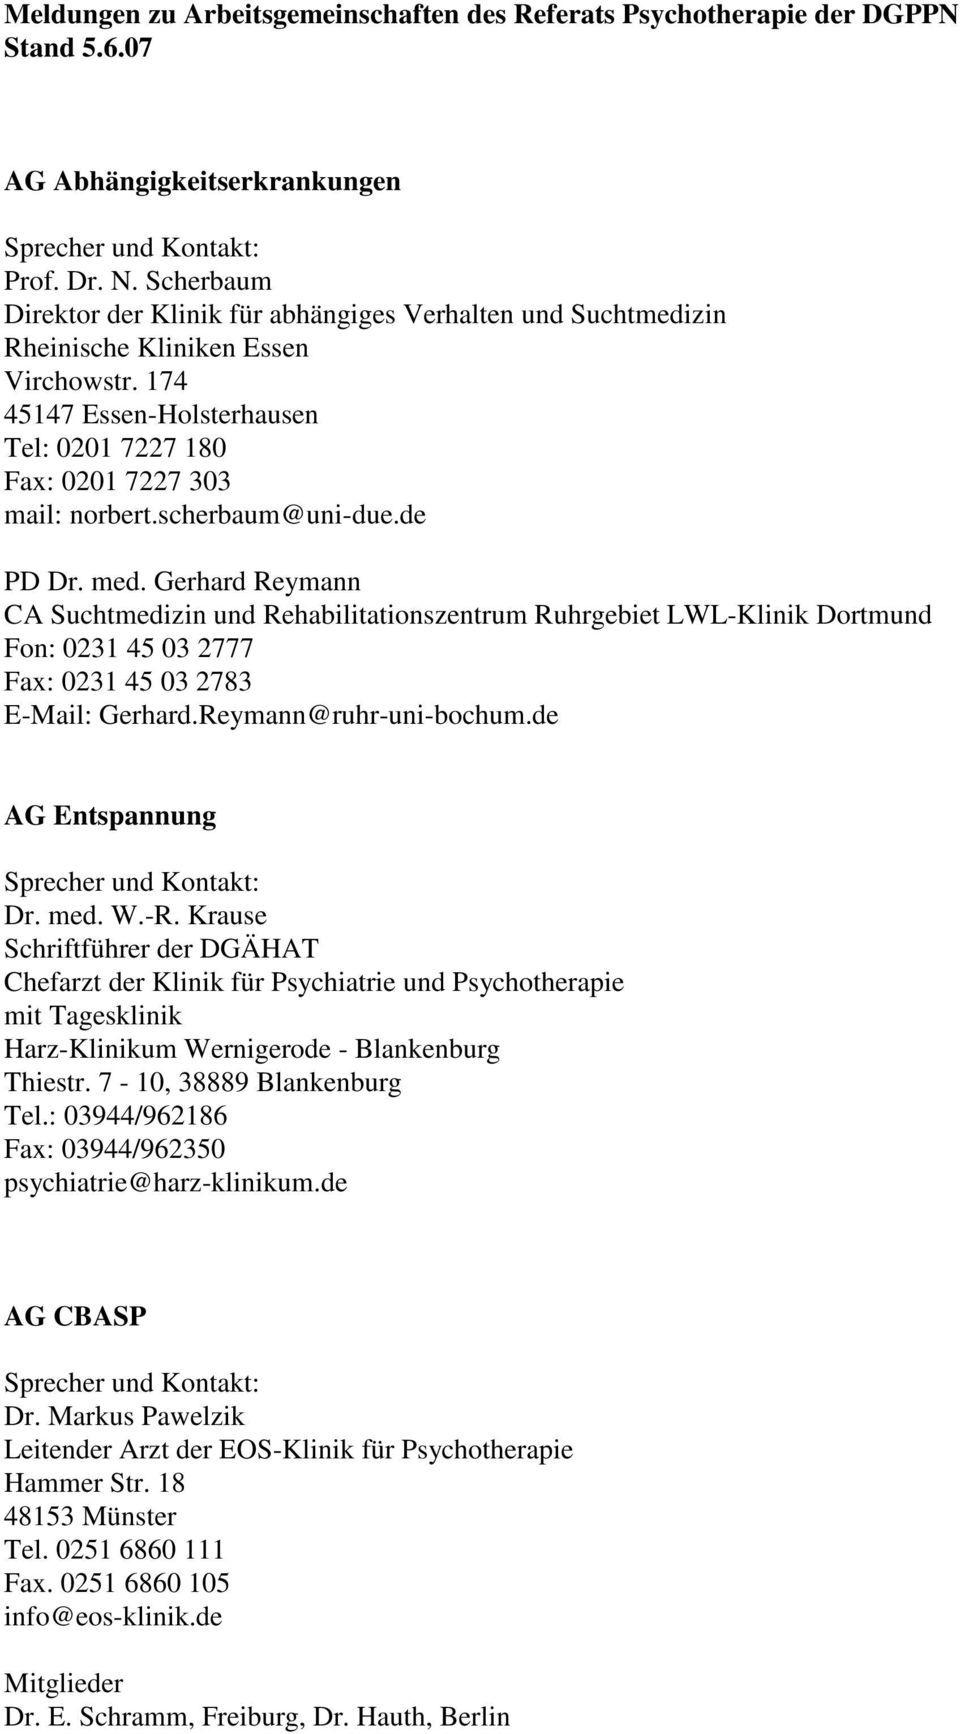 scherbaum@uni-due.de PD Dr. med. Gerhard Reymann CA Suchtmedizin und Rehabilitationszentrum Ruhrgebiet LWL-Klinik Dortmund Fon: 0231 45 03 2777 Fax: 0231 45 03 2783 E-Mail: Gerhard.